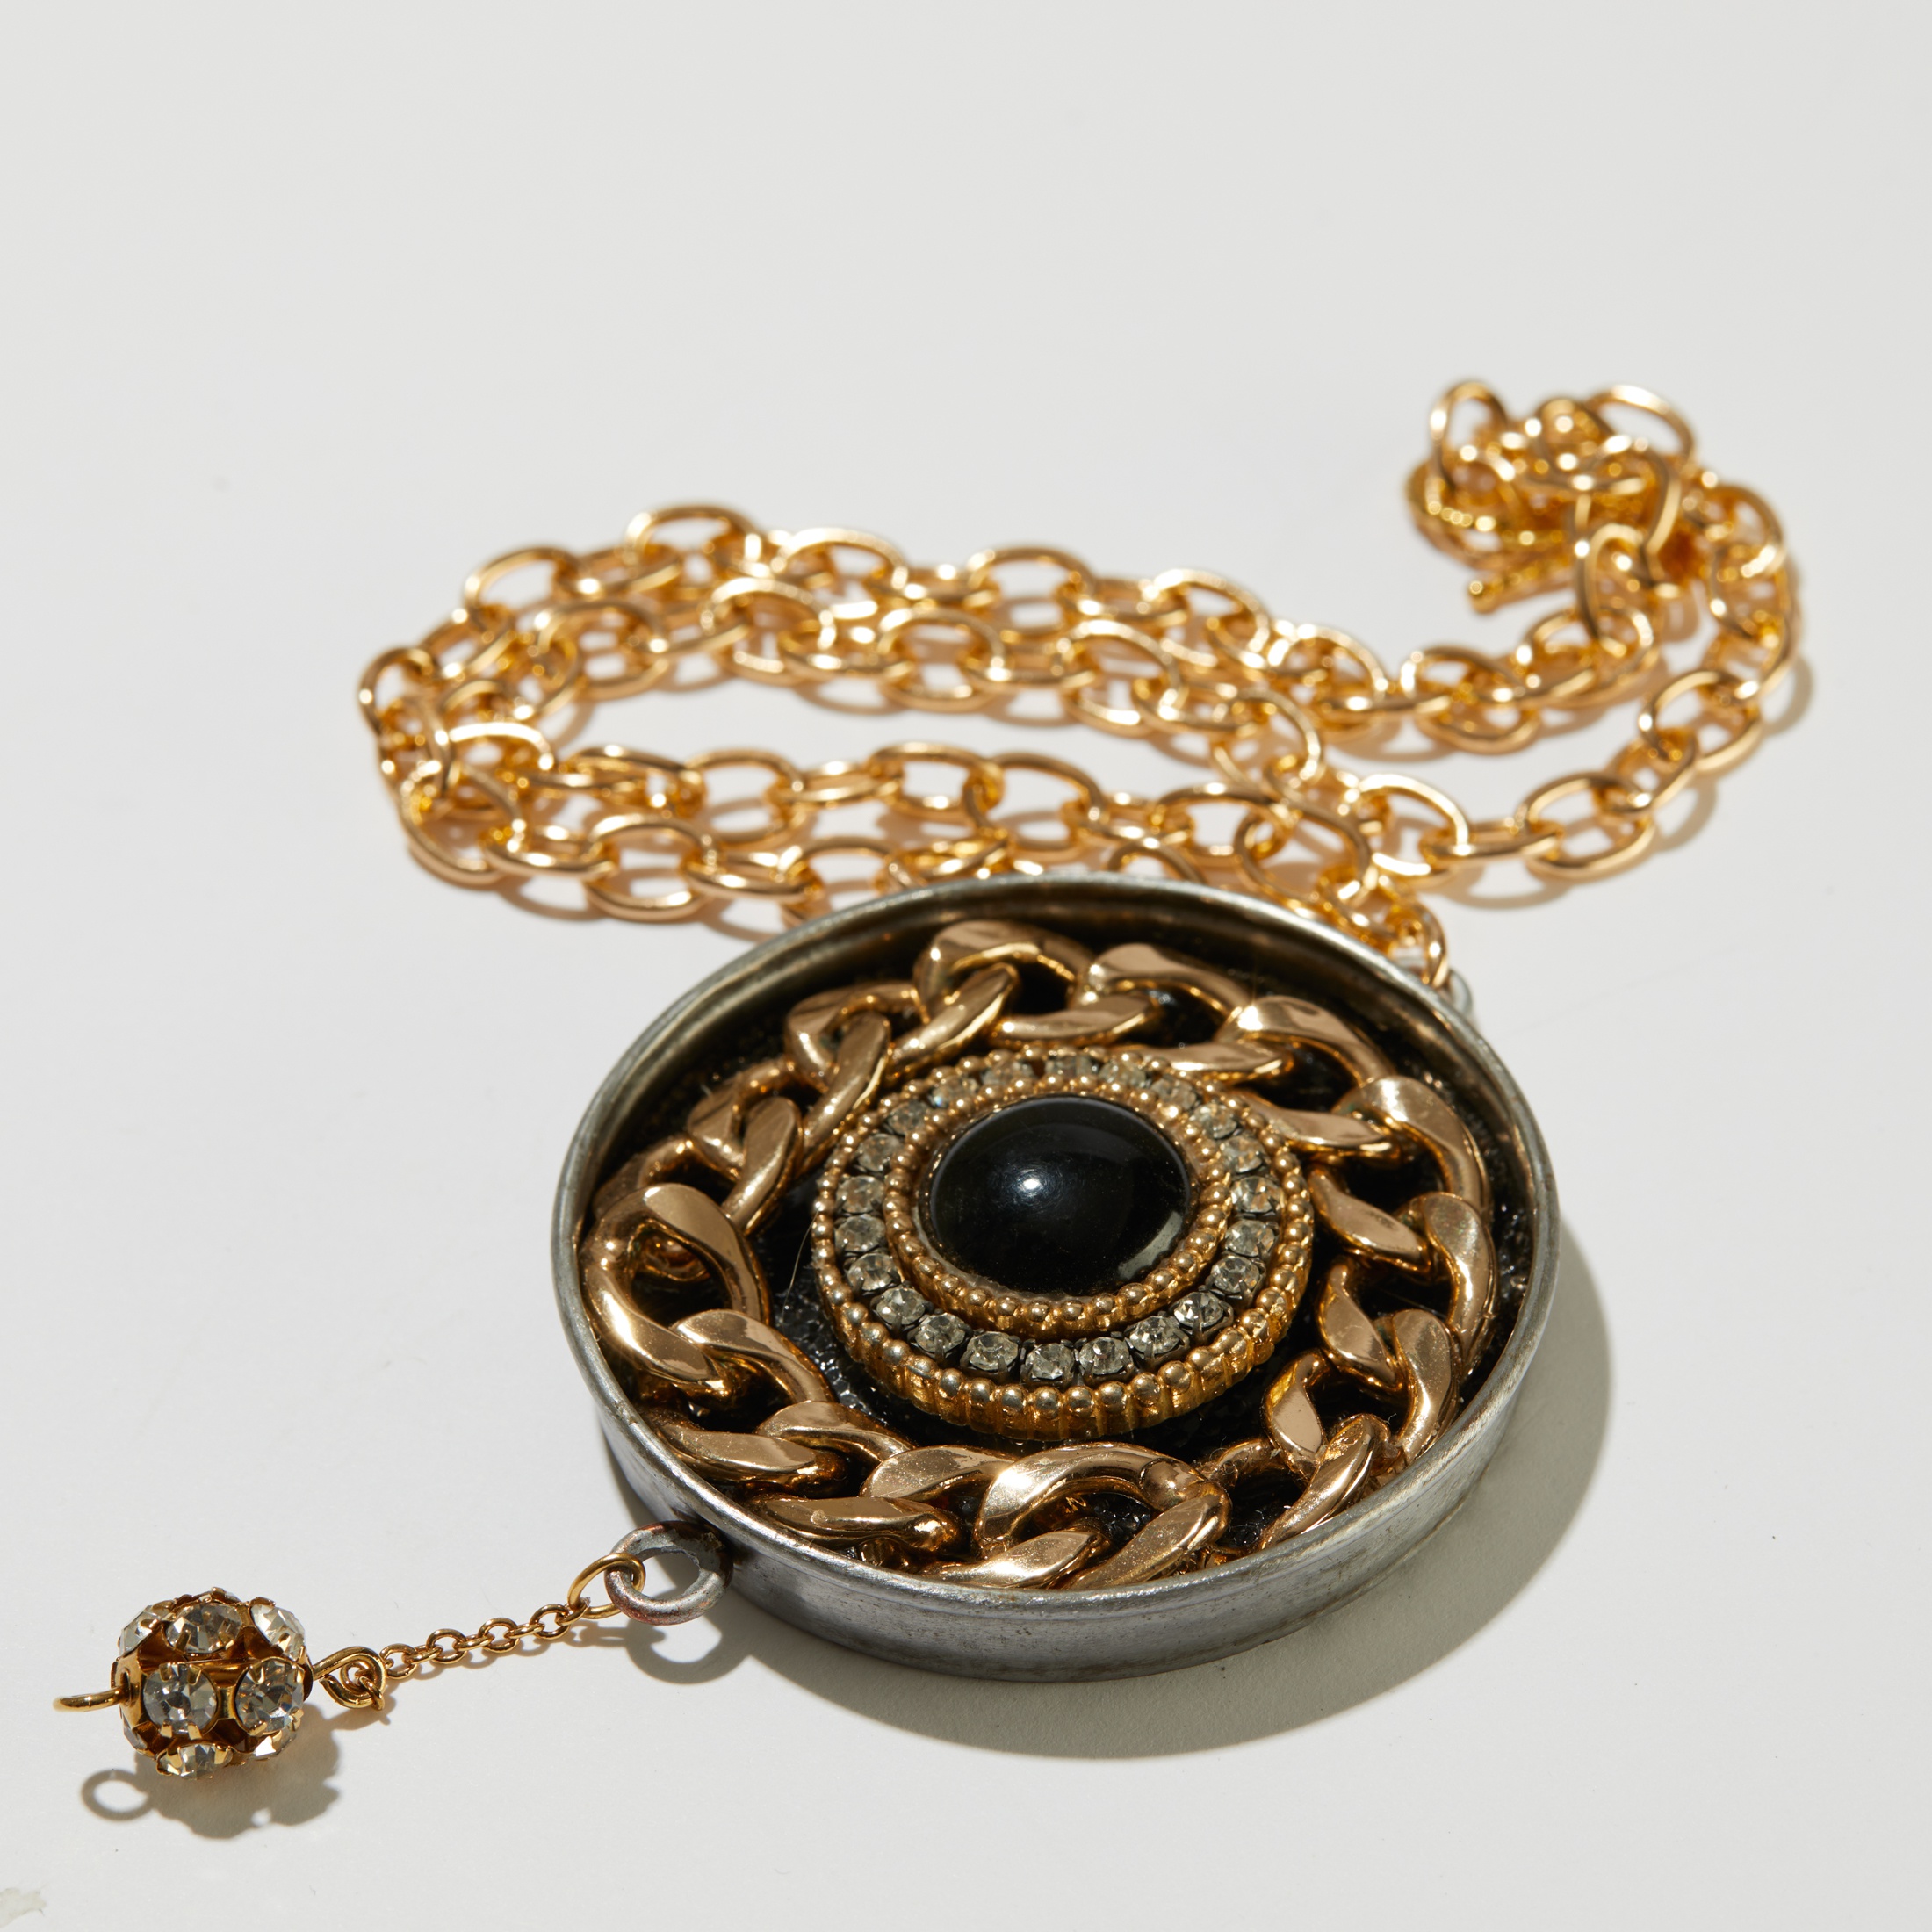 Robert Ebendorf and Joe Price Jewelry- Form & Concept Gallery